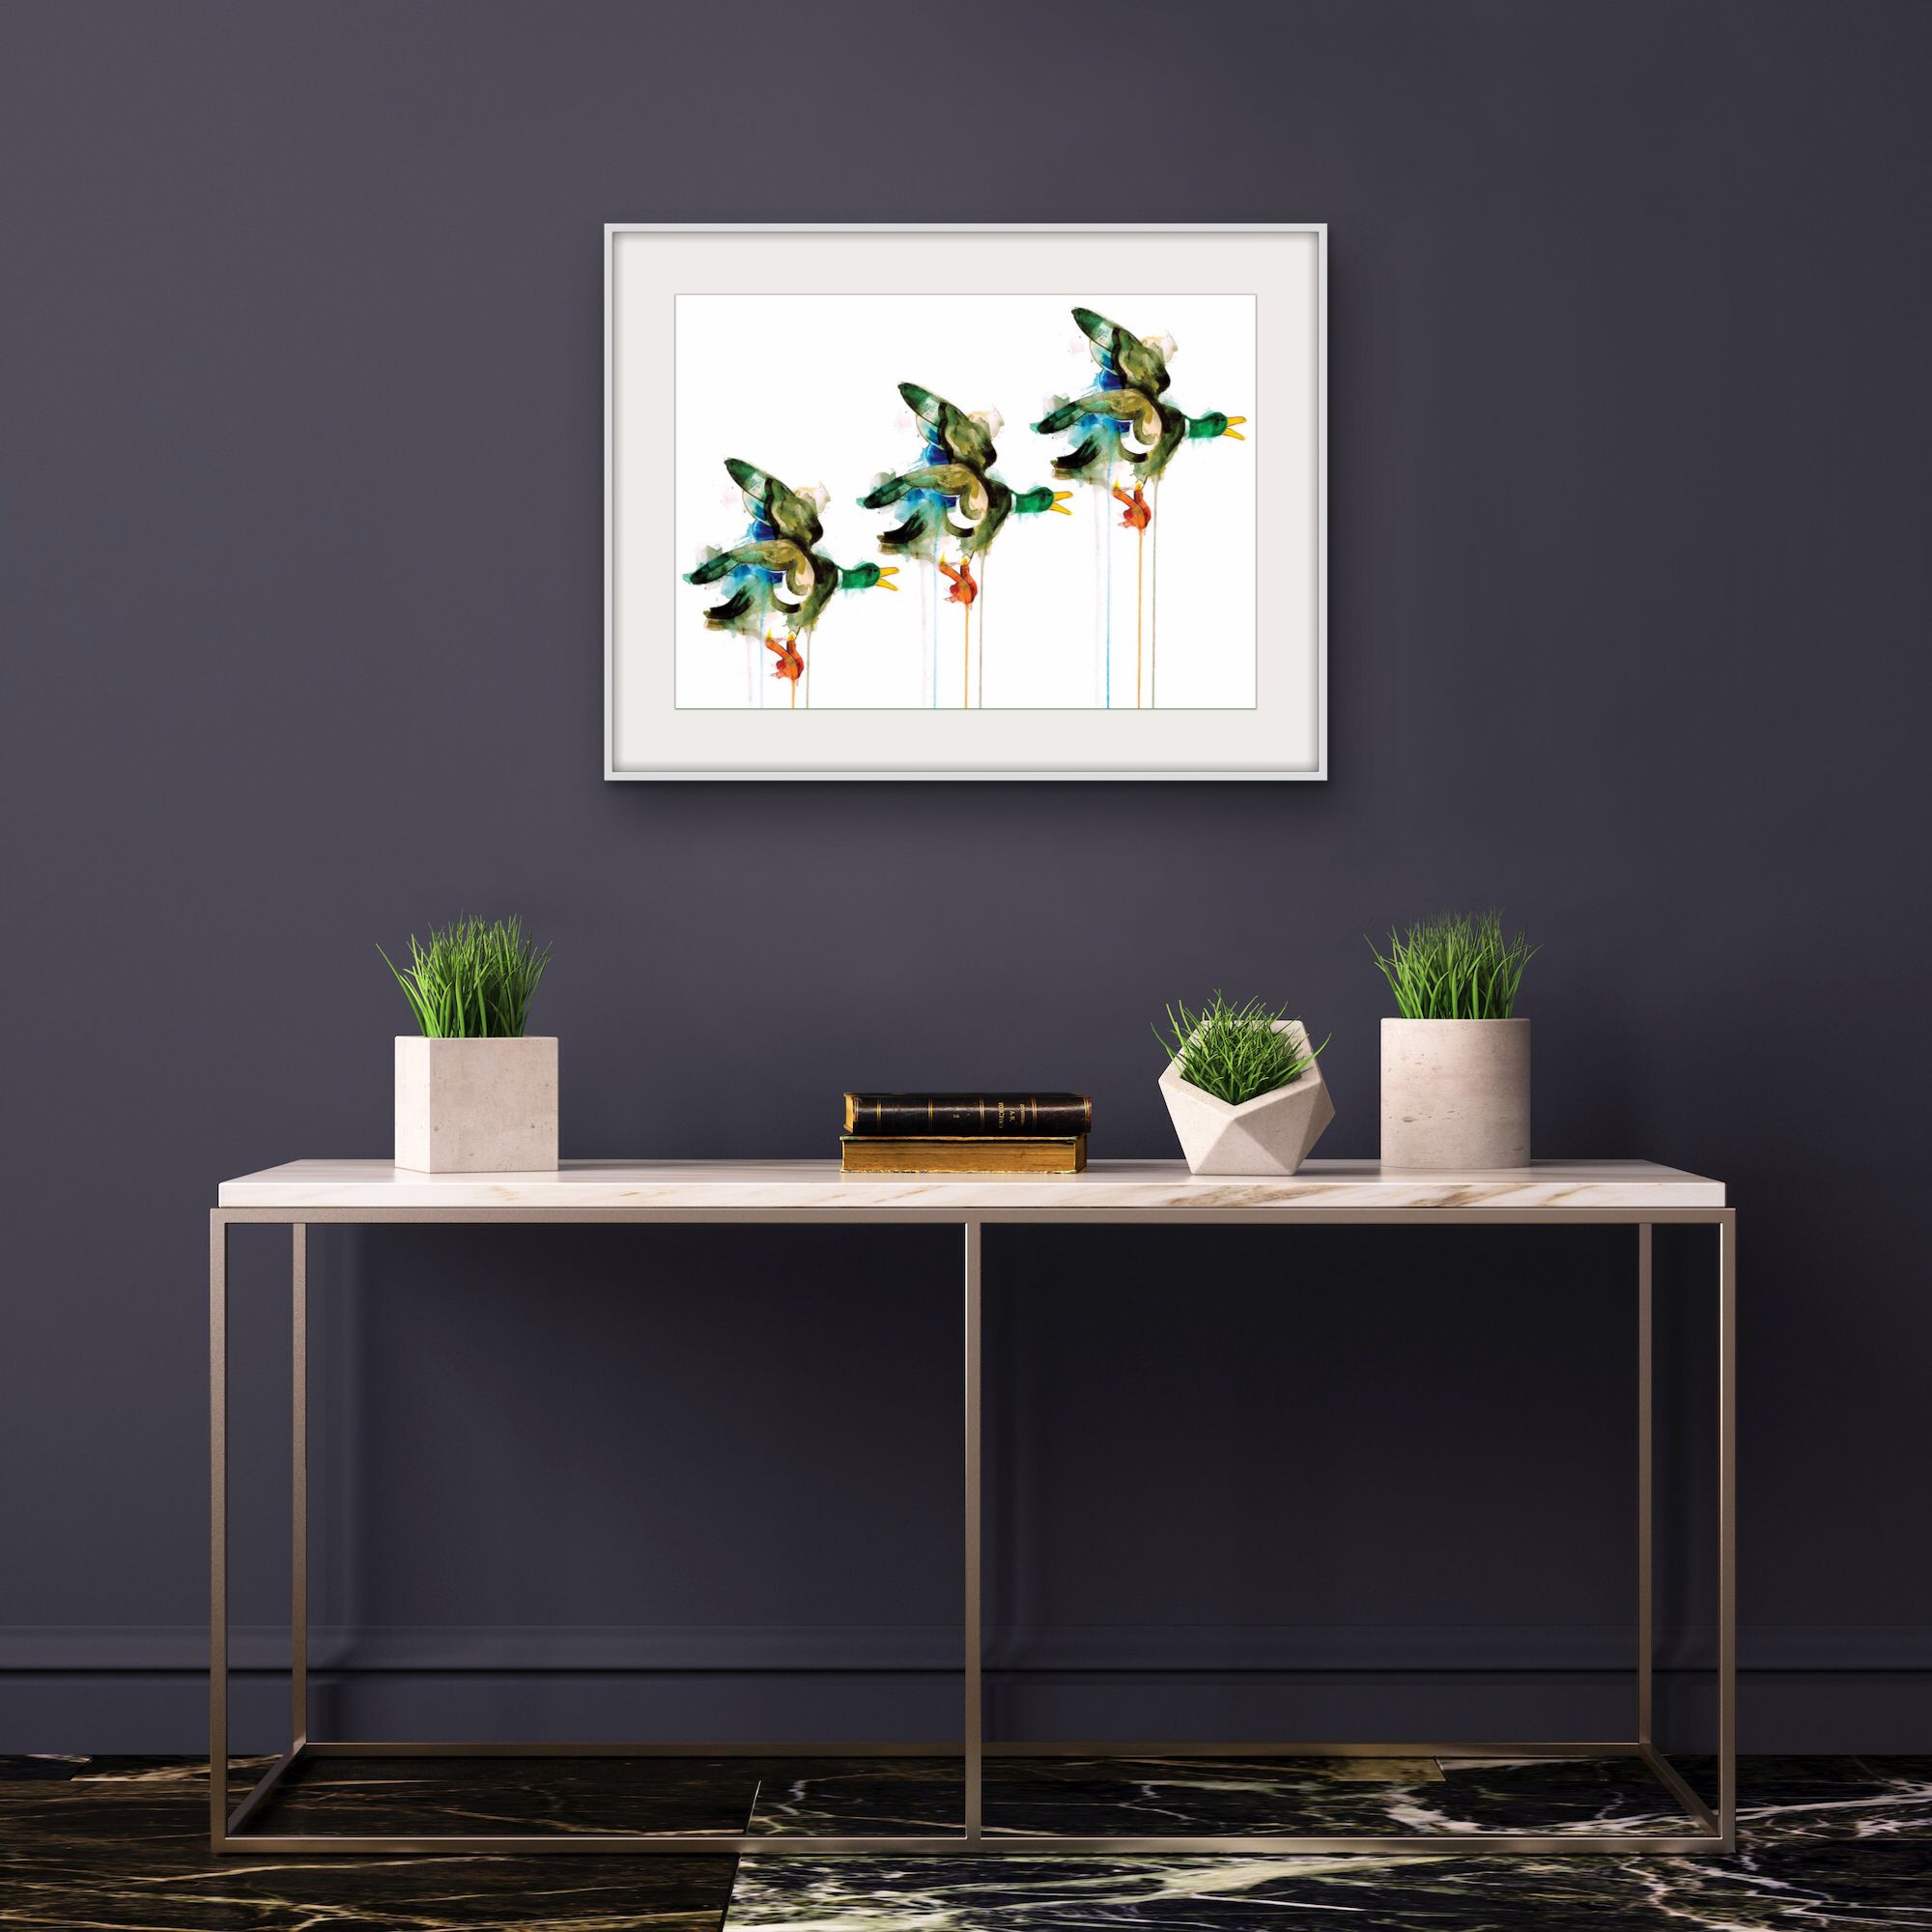 Three Flying Ducks by Gavin Dobson